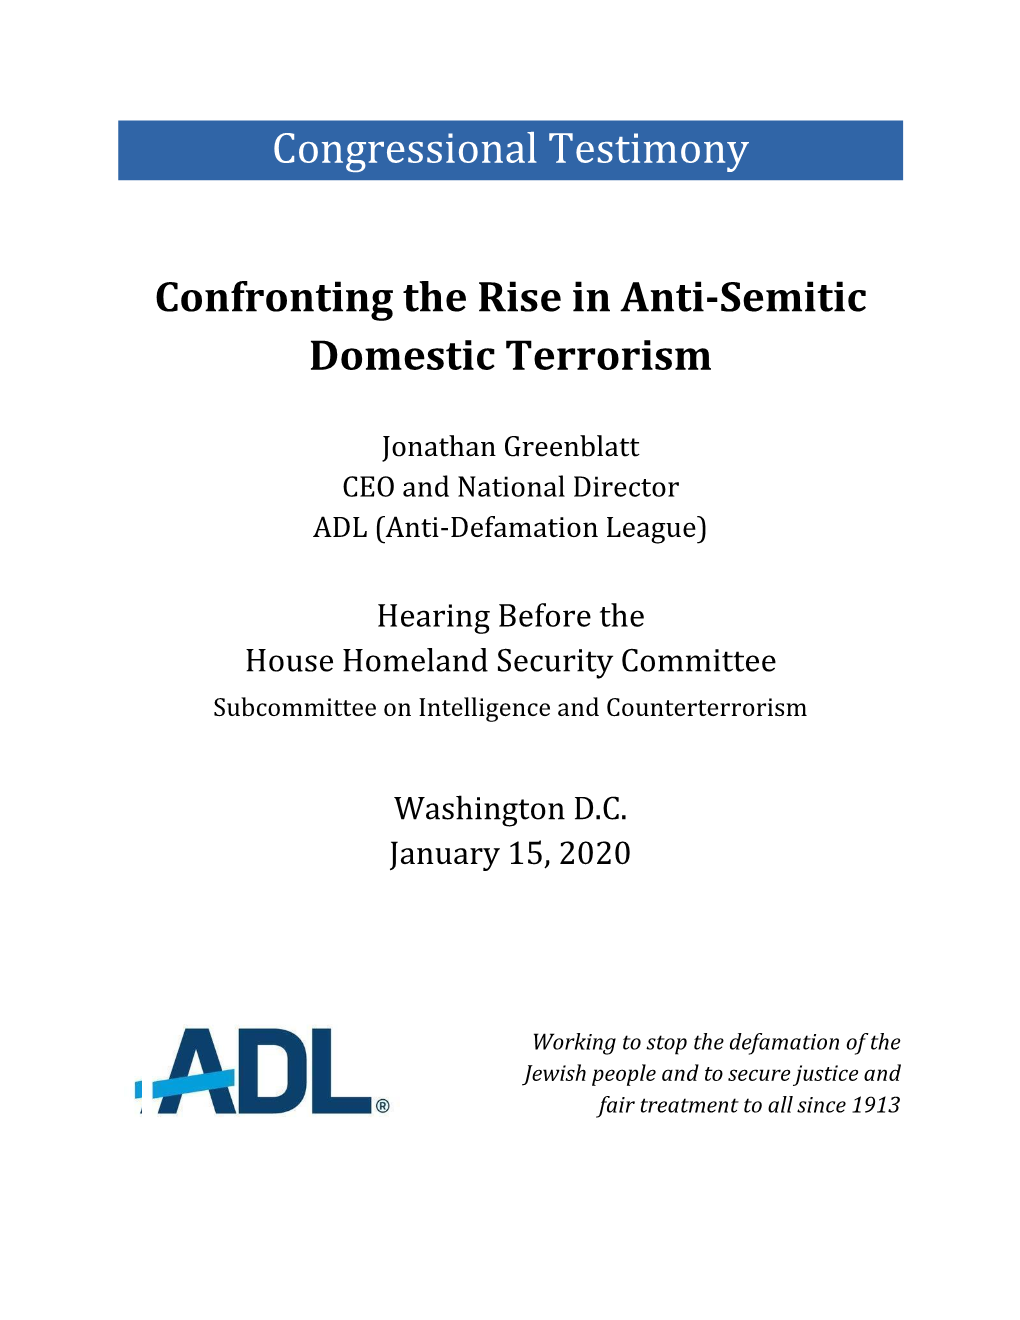 Congressional Testimony Confronting the Rise in Anti-Semitic Domestic